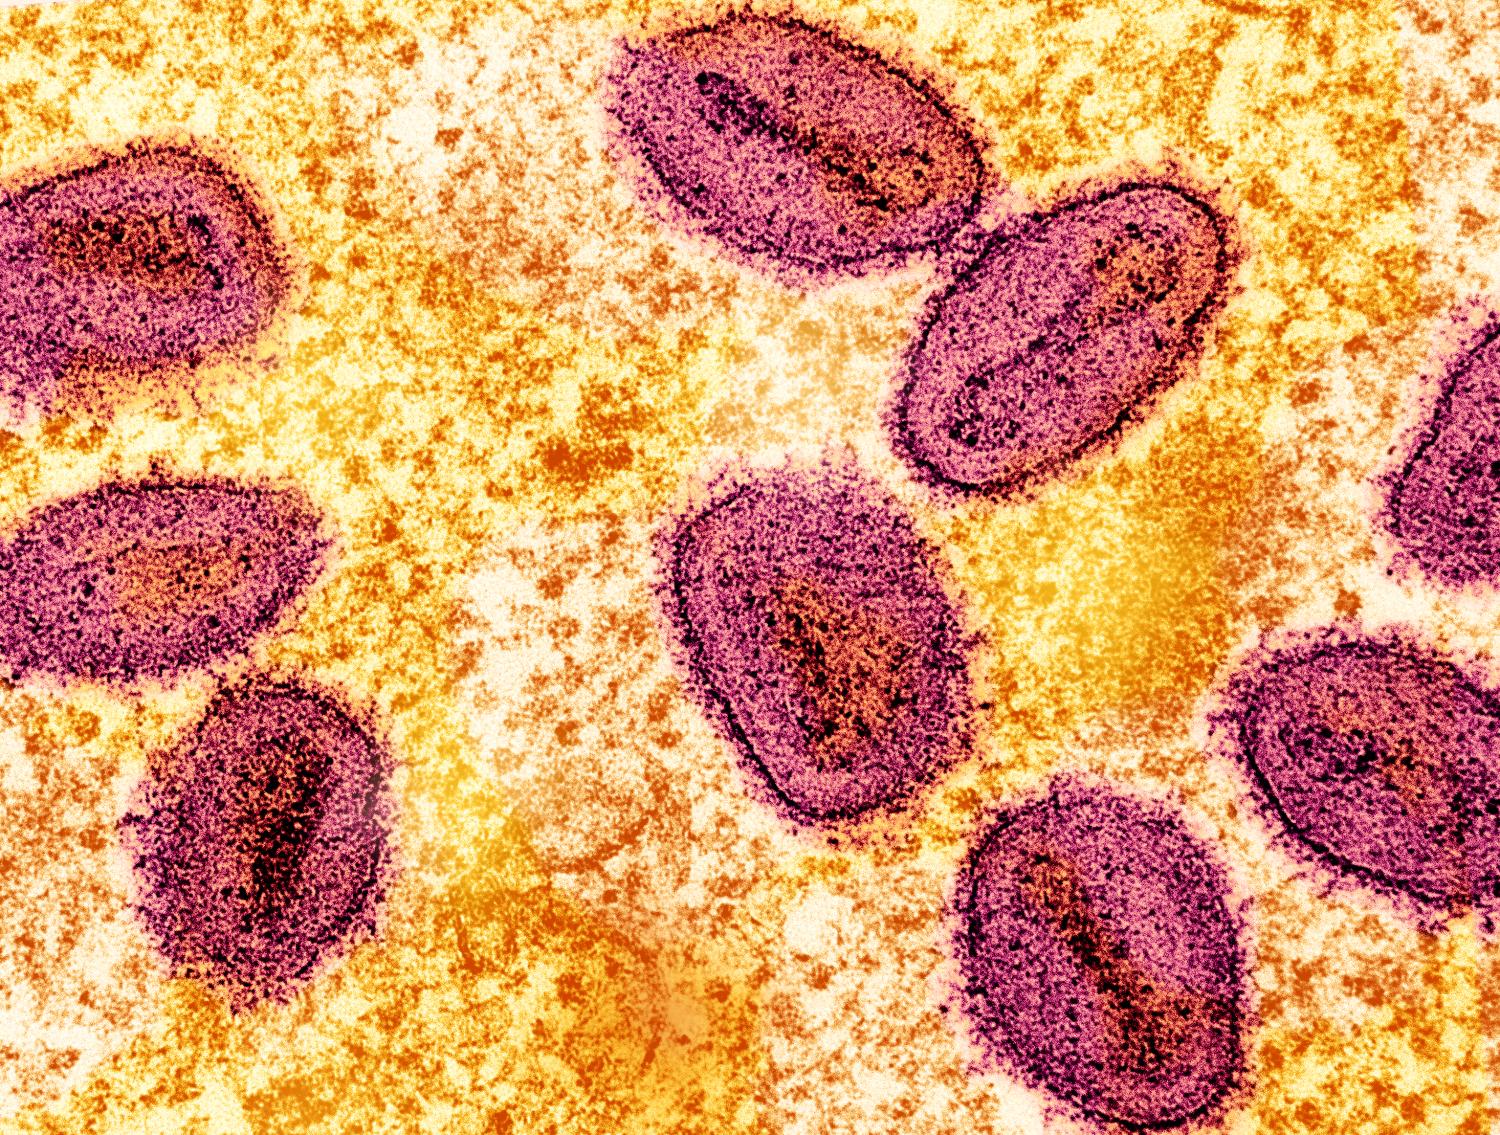 mpox virus 